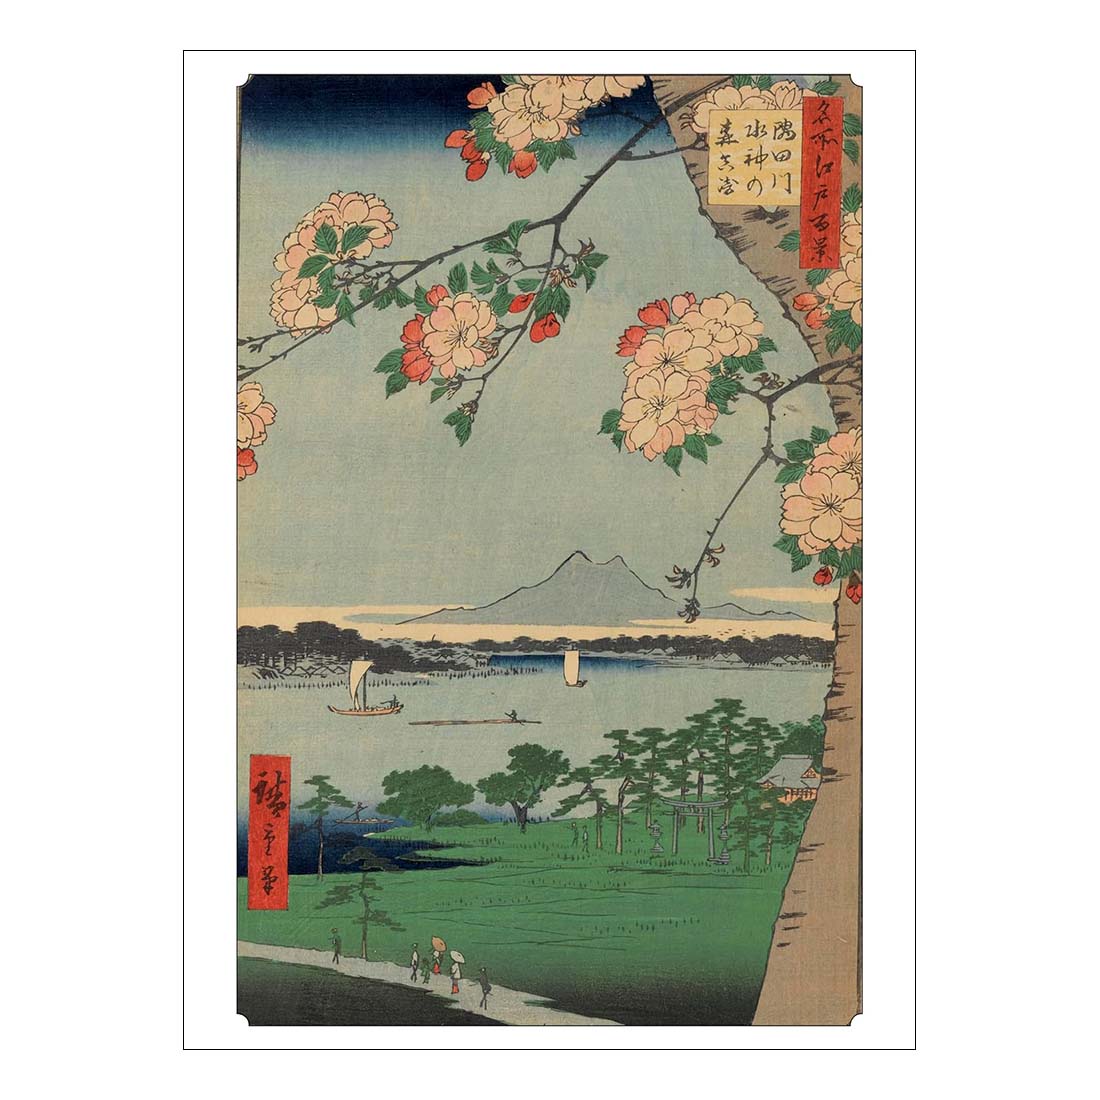 Hiroshige Book of Postcards